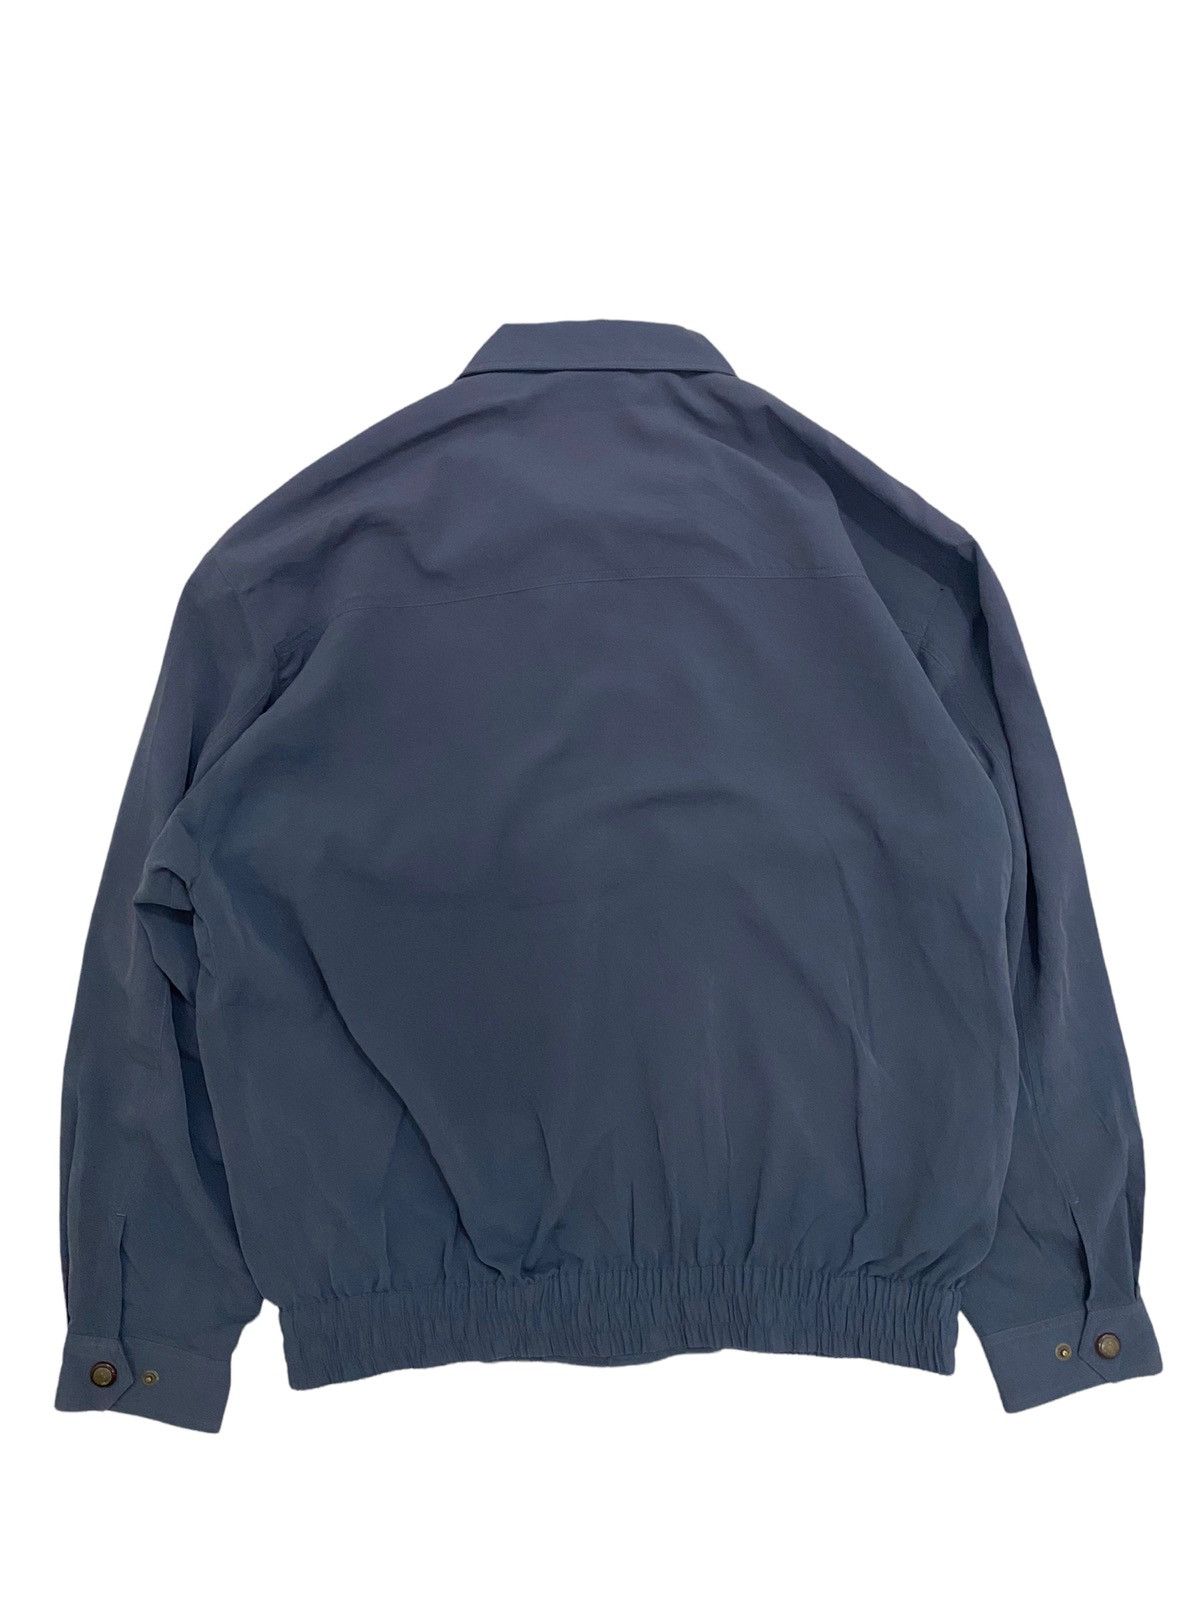 Vintage Vintage Gianni Valentino Harrington Jacket Size US L / EU 52-54 / 3 - 11 Preview